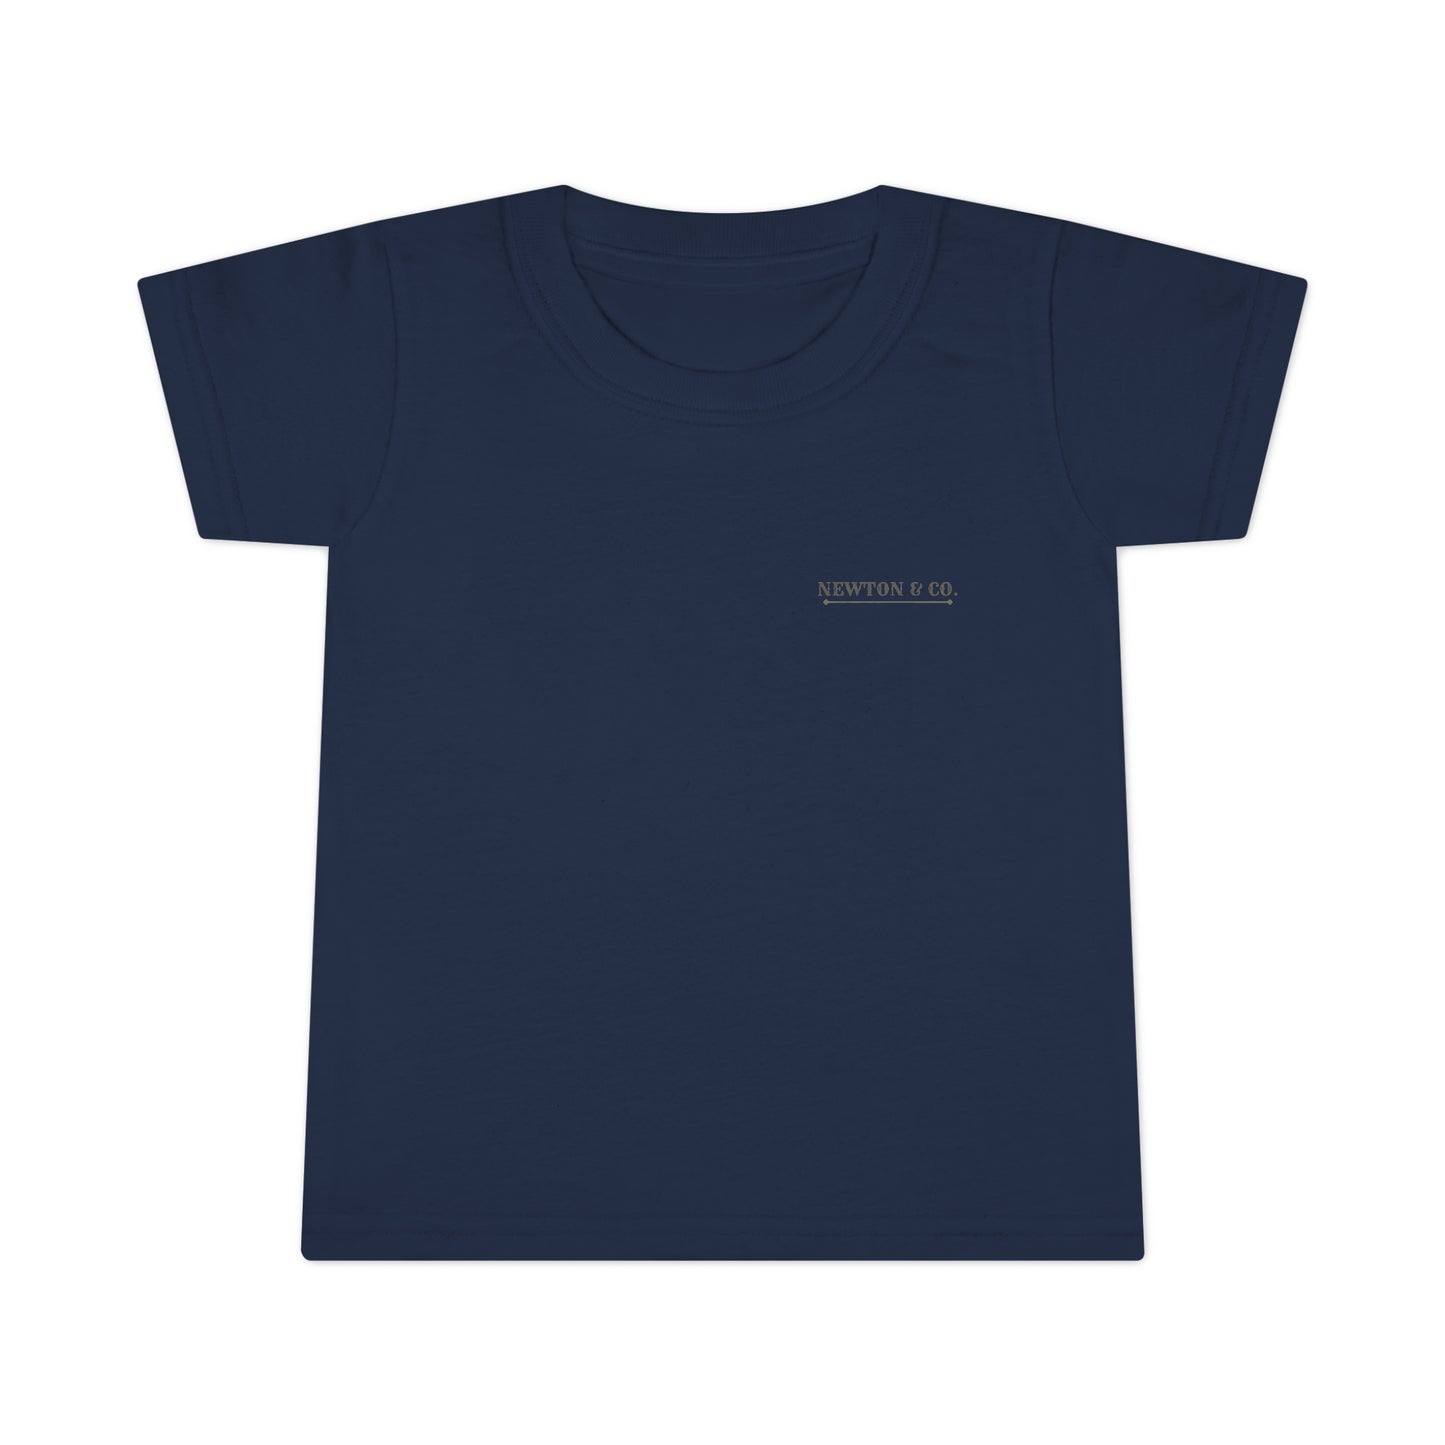 Newton & Co. Toddler T-shirt